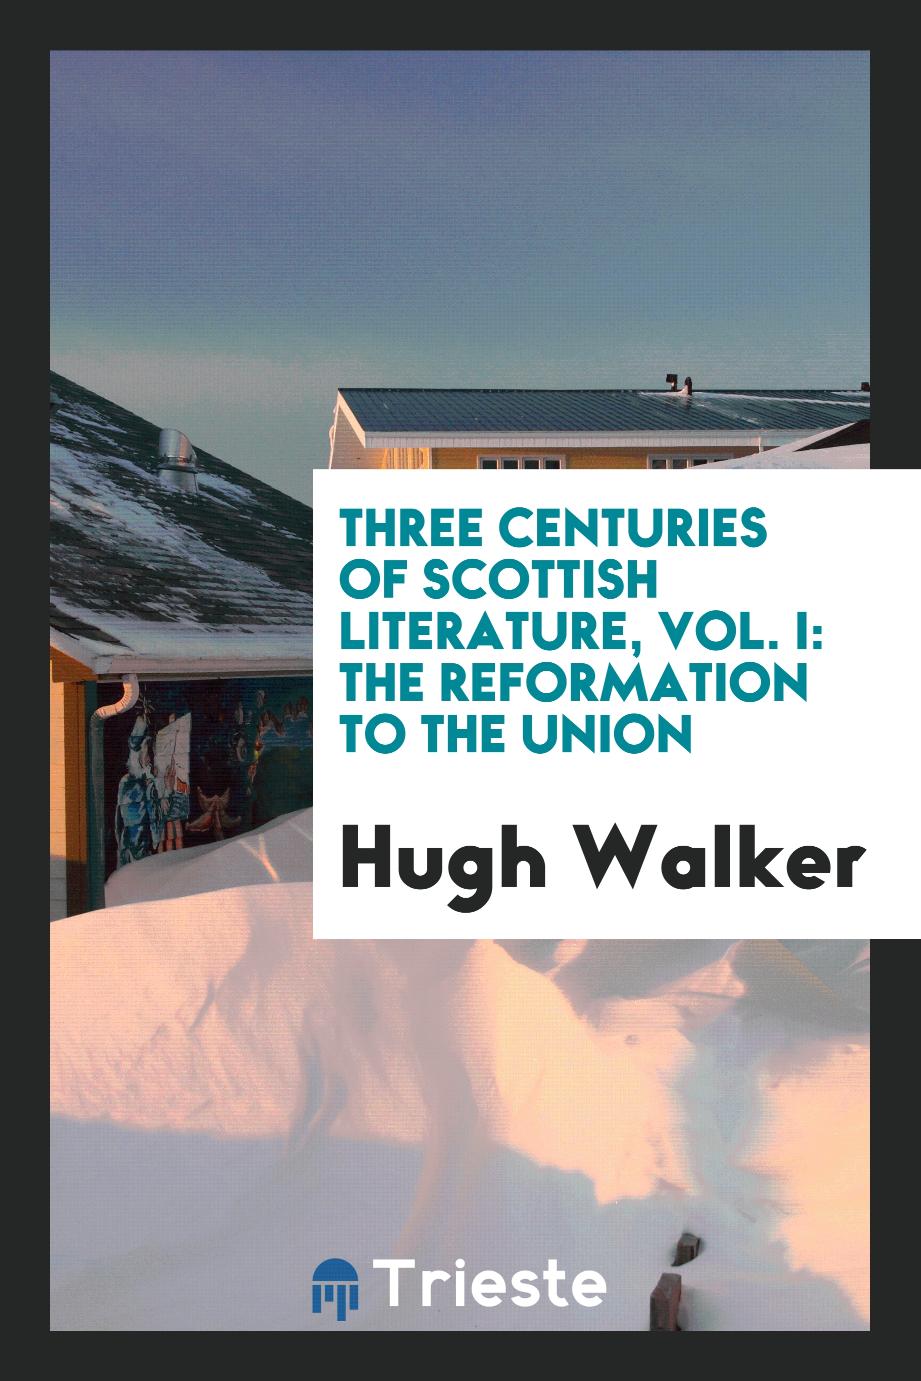 Three centuries of Scottish literature, Vol. I: The reformation to the Union